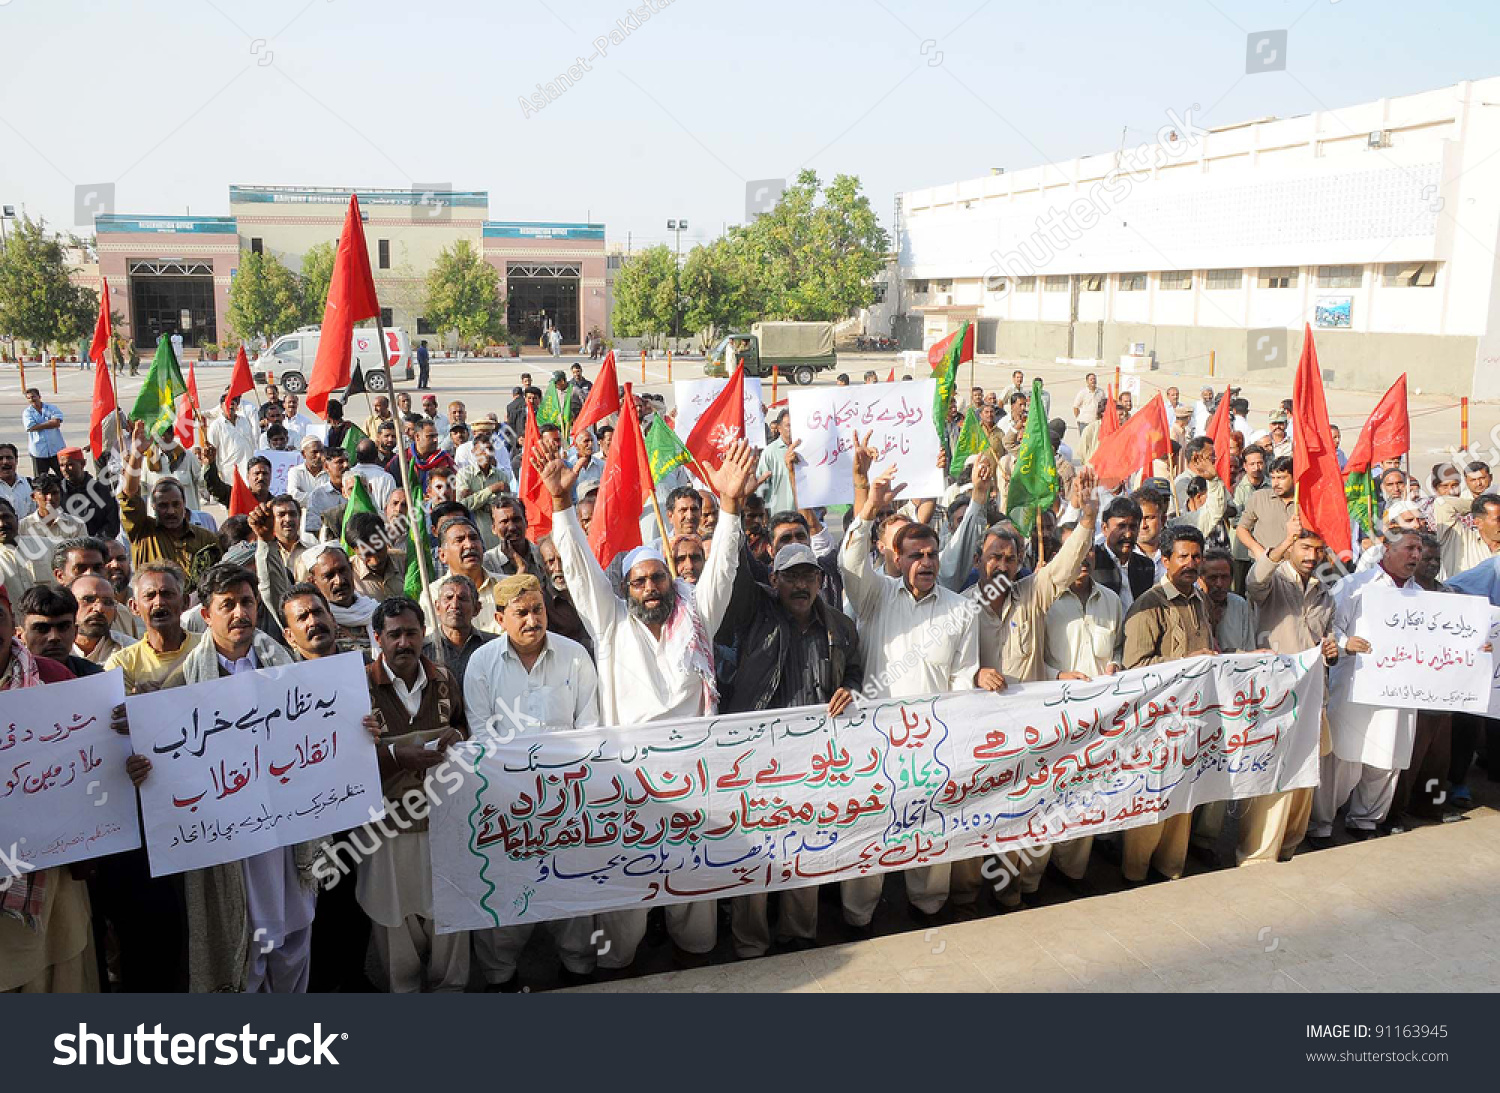 stock-photo-karachi-pakistan-dec-railway-employees-chant-slogans-in-favor-of-their-demands-during-91163945.jpg